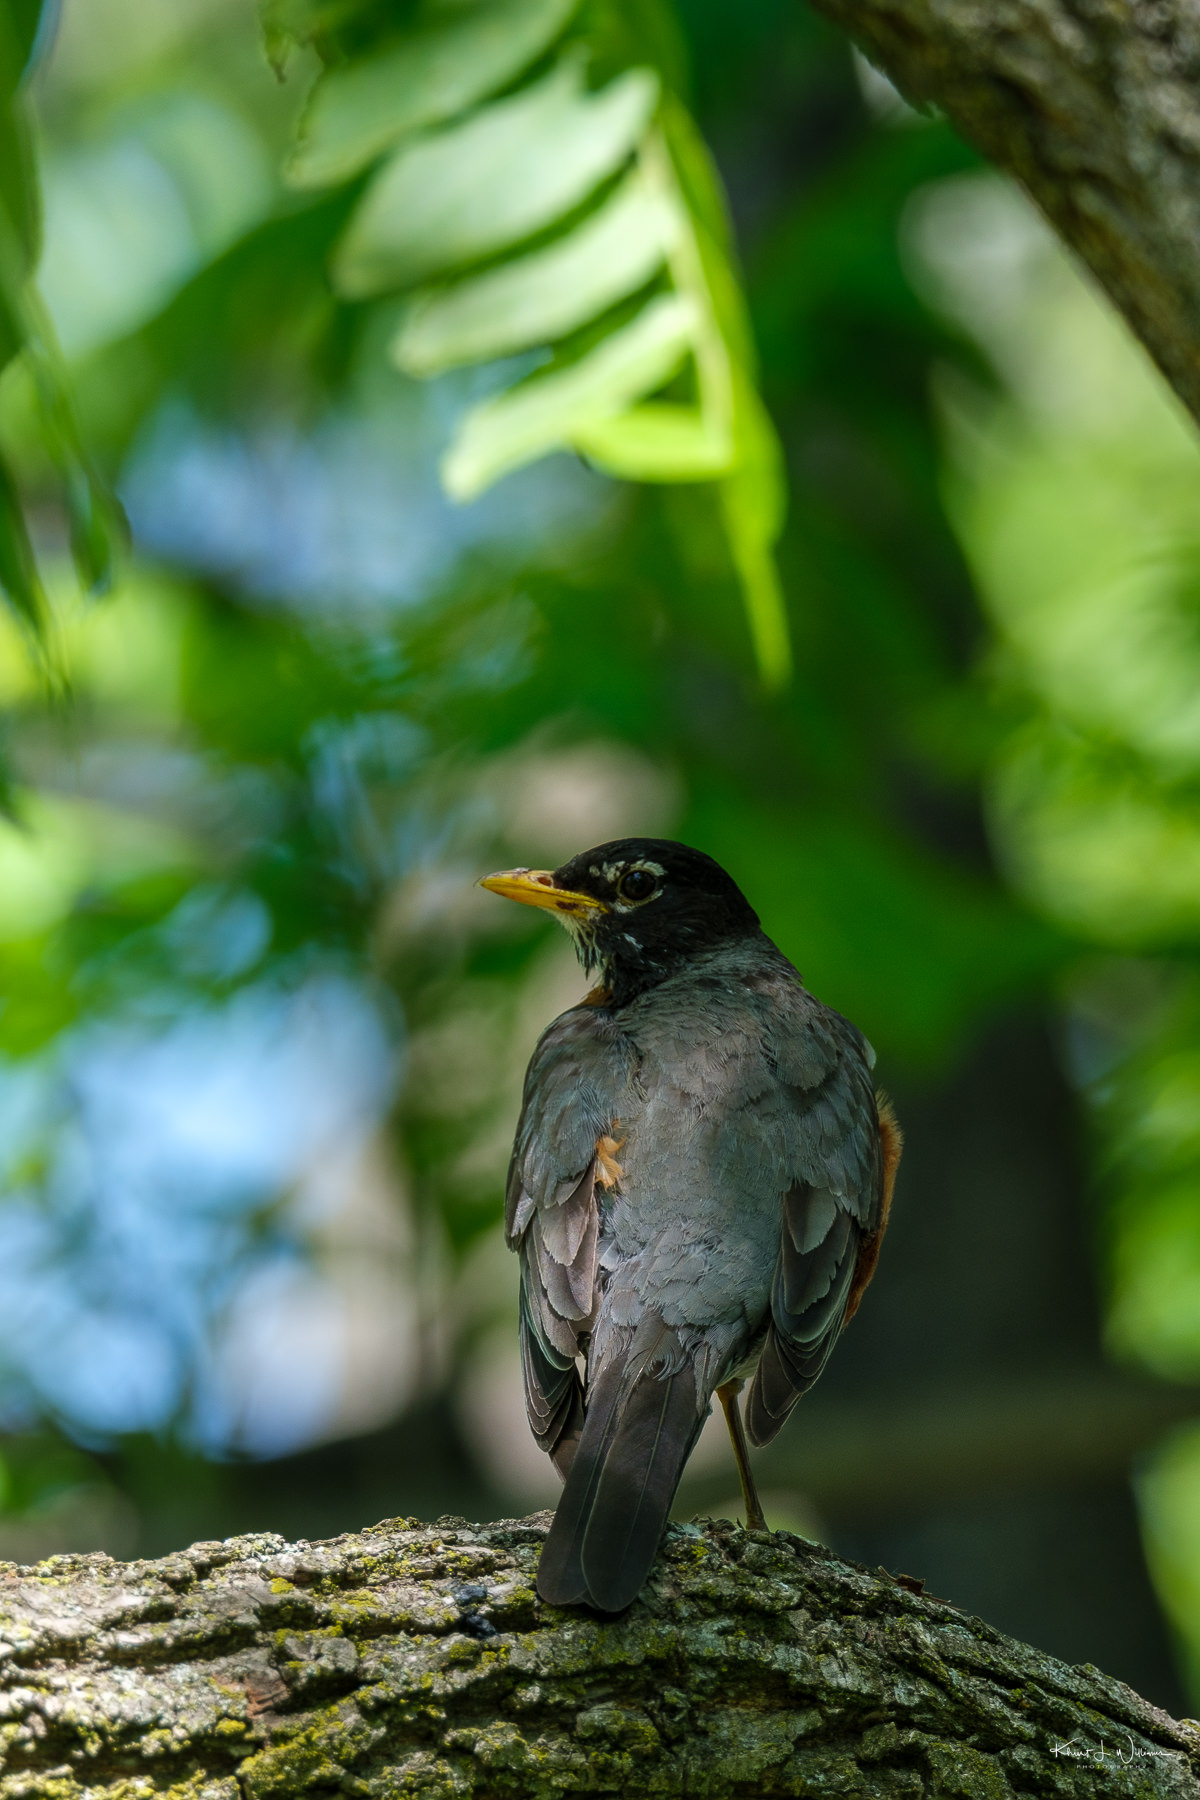 Handling and observing bird nests